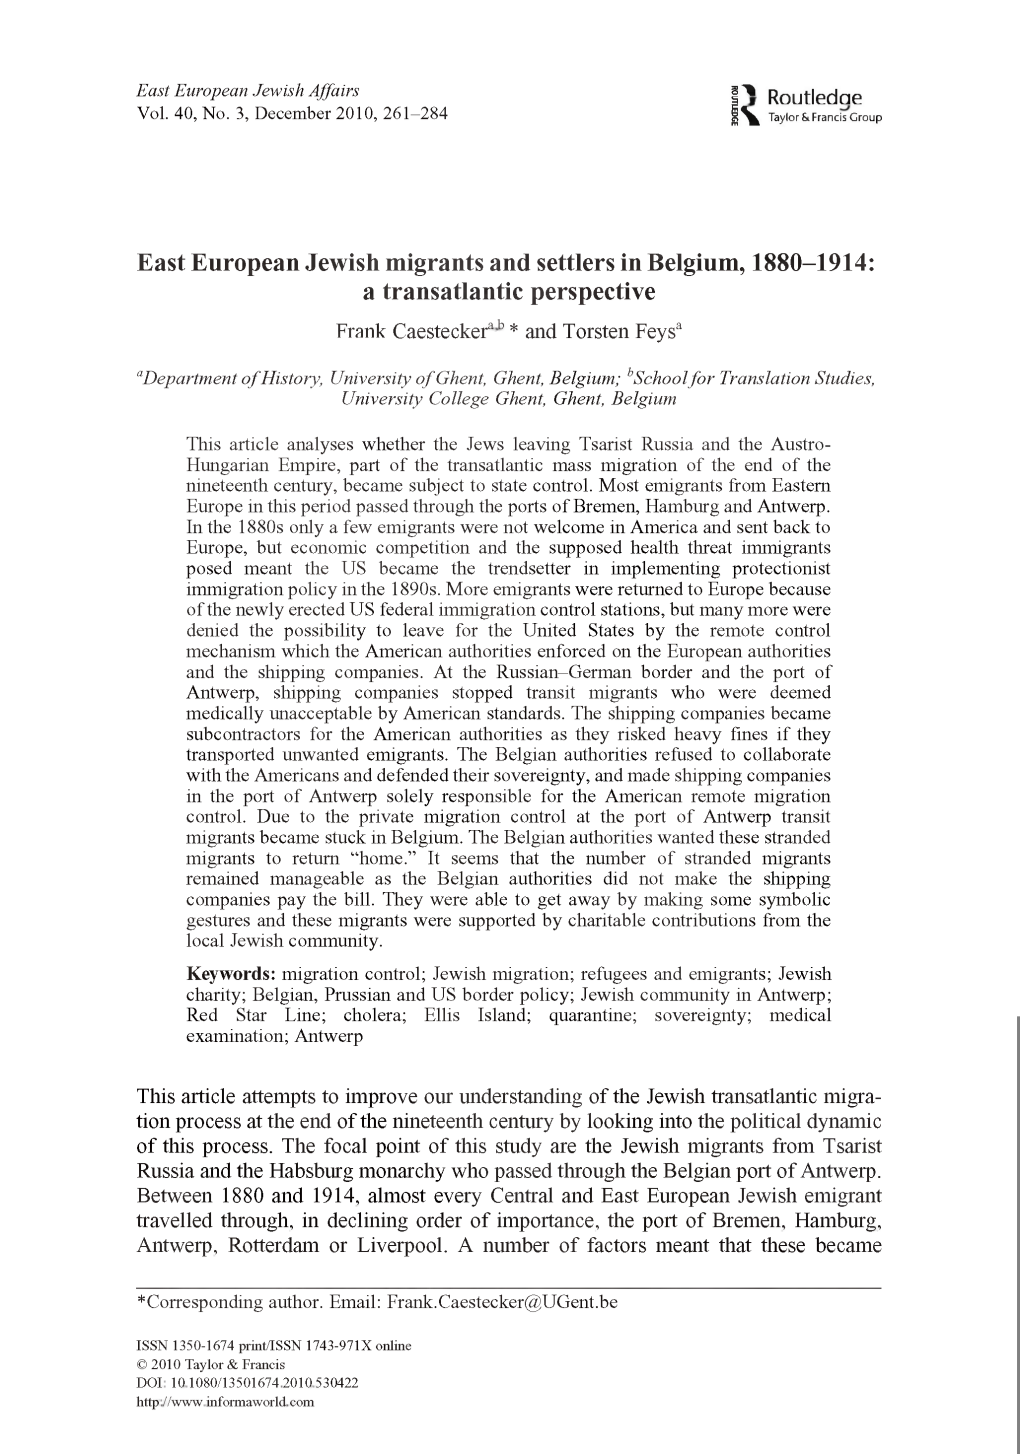 East European Jewish Migrants and Settlers in Belgium, 1880-1914: a Transatlantic Perspective Frank Caesteckera B * and Torsten Feysa